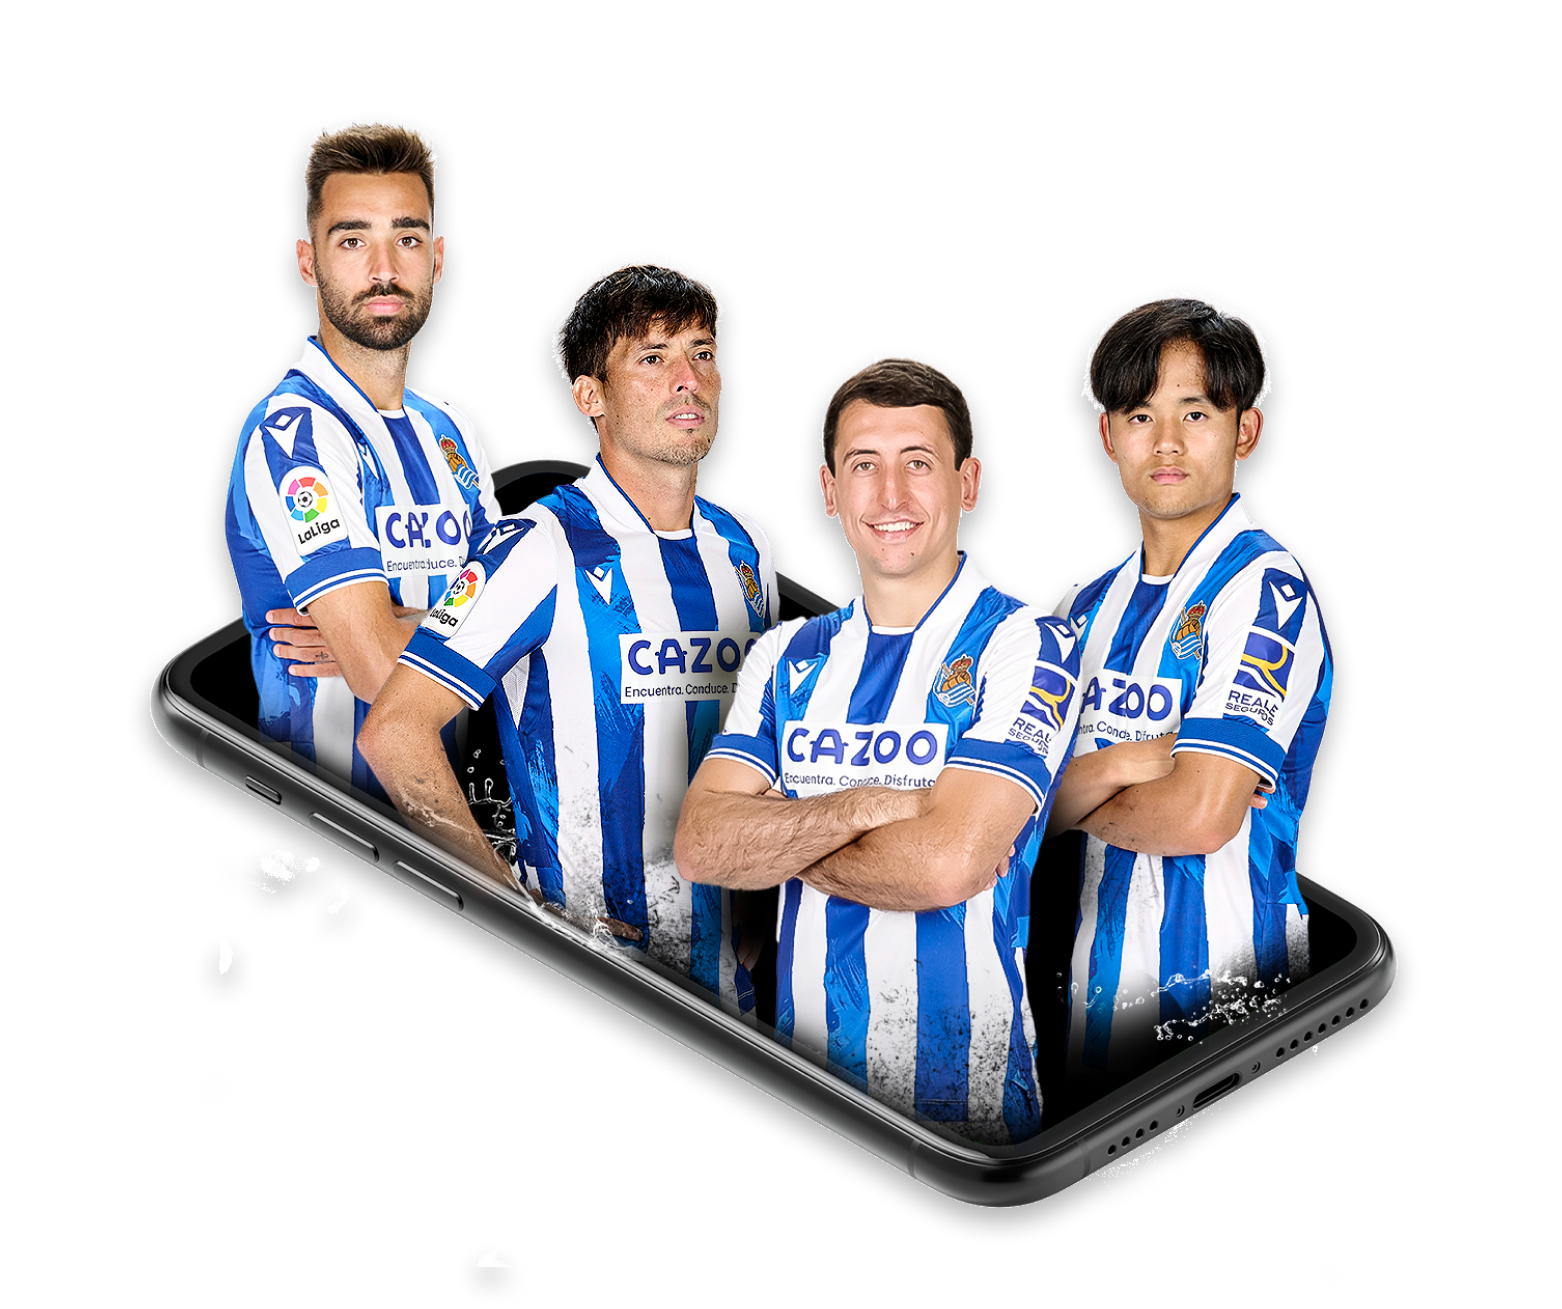 Ligas Club na App Store